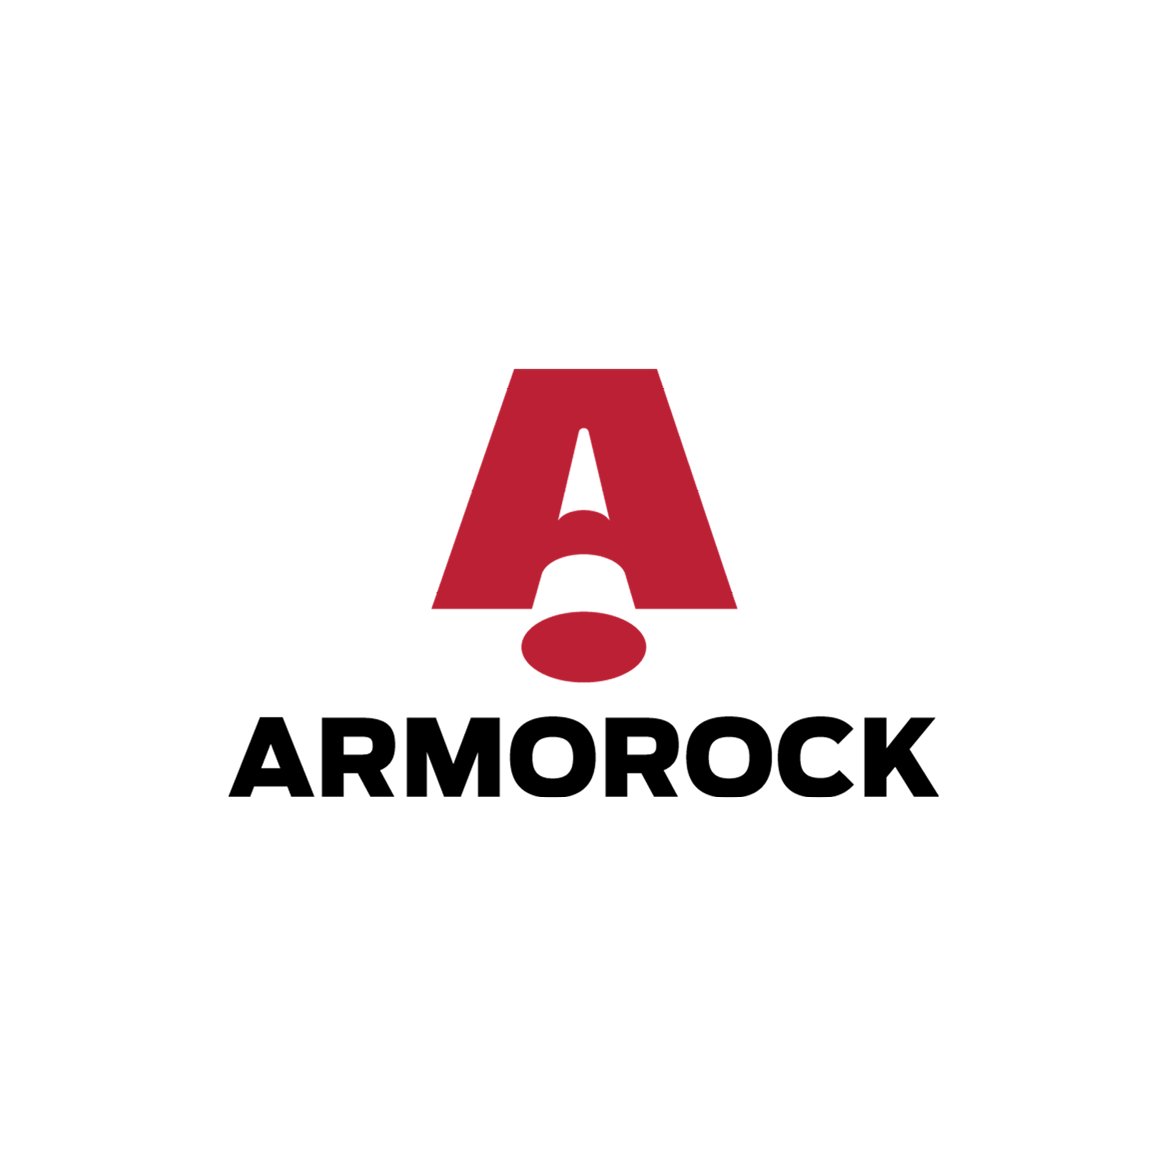 Armorock